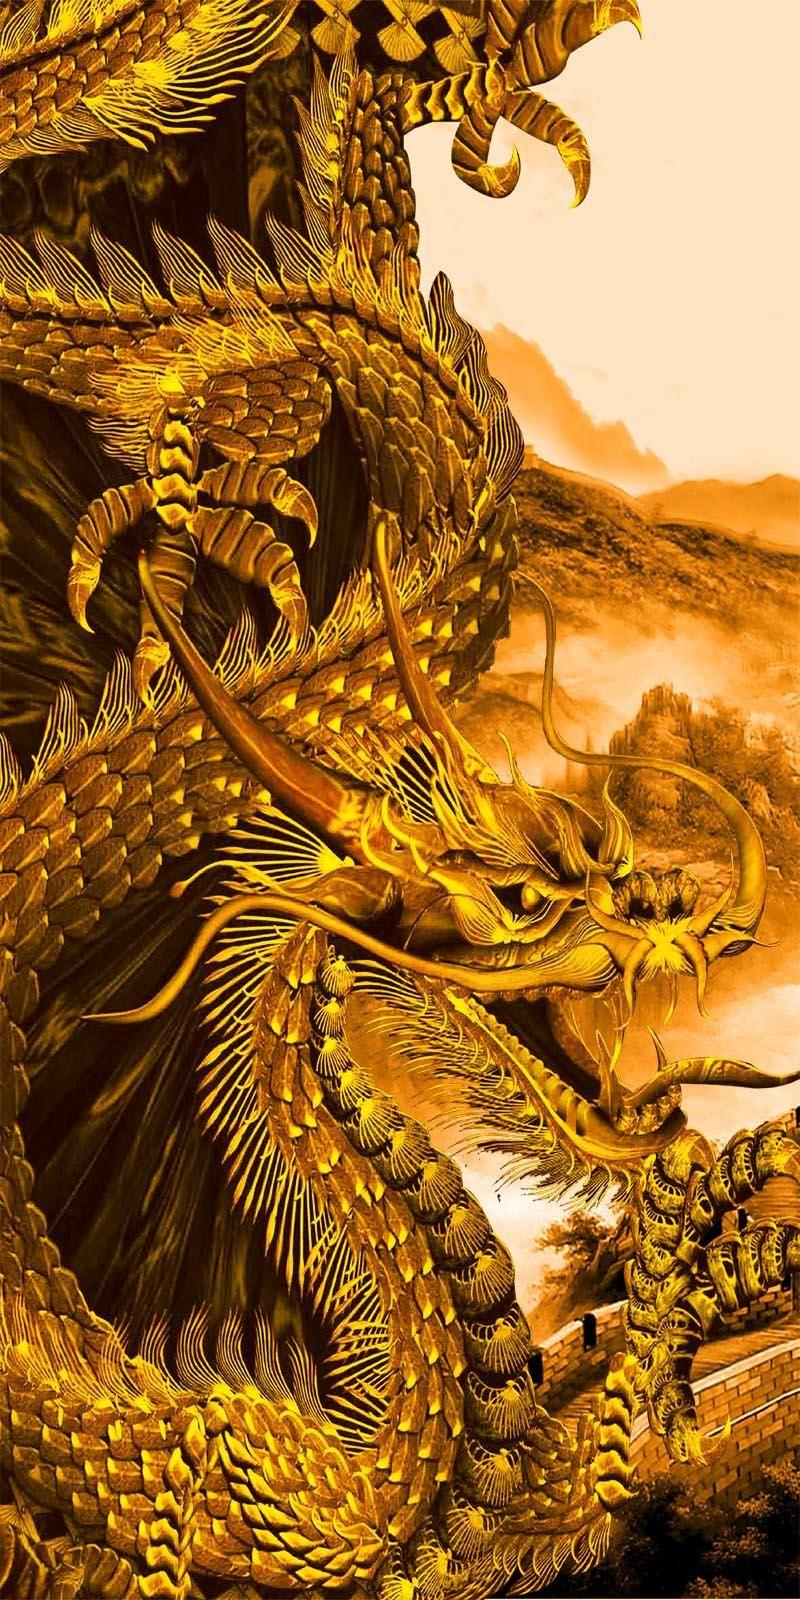 Golden Dragon Wallpaper Custom Photo Wallpaper 3D Of Wall Paper